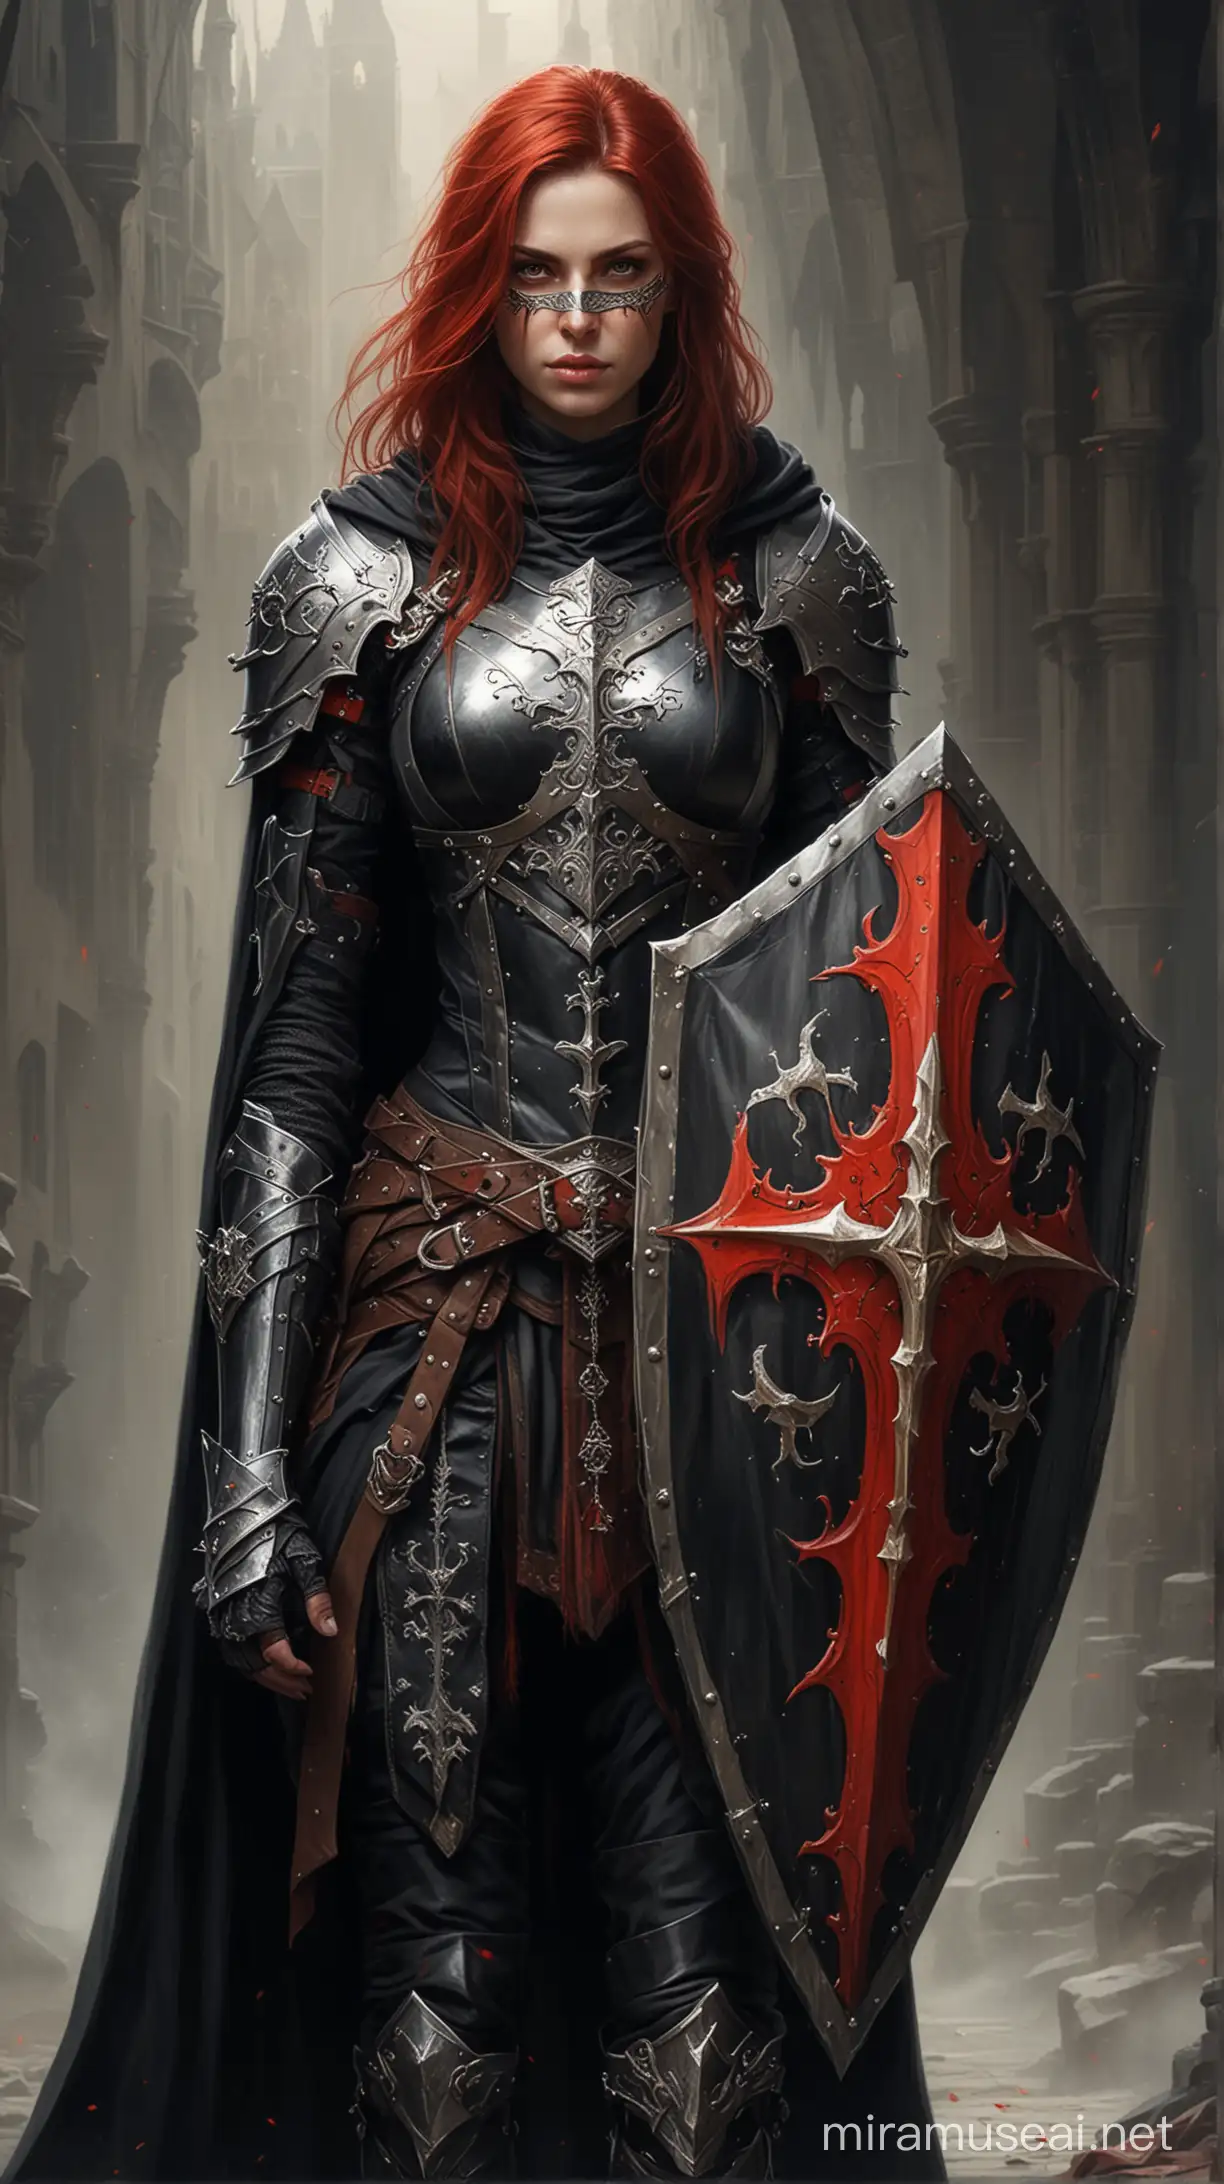 Medieval knight, black cloak, five swords hilted on back, large kite shield, white details, epic fantasy, Inquisition symbol on banner. woman, knight mask, red details

